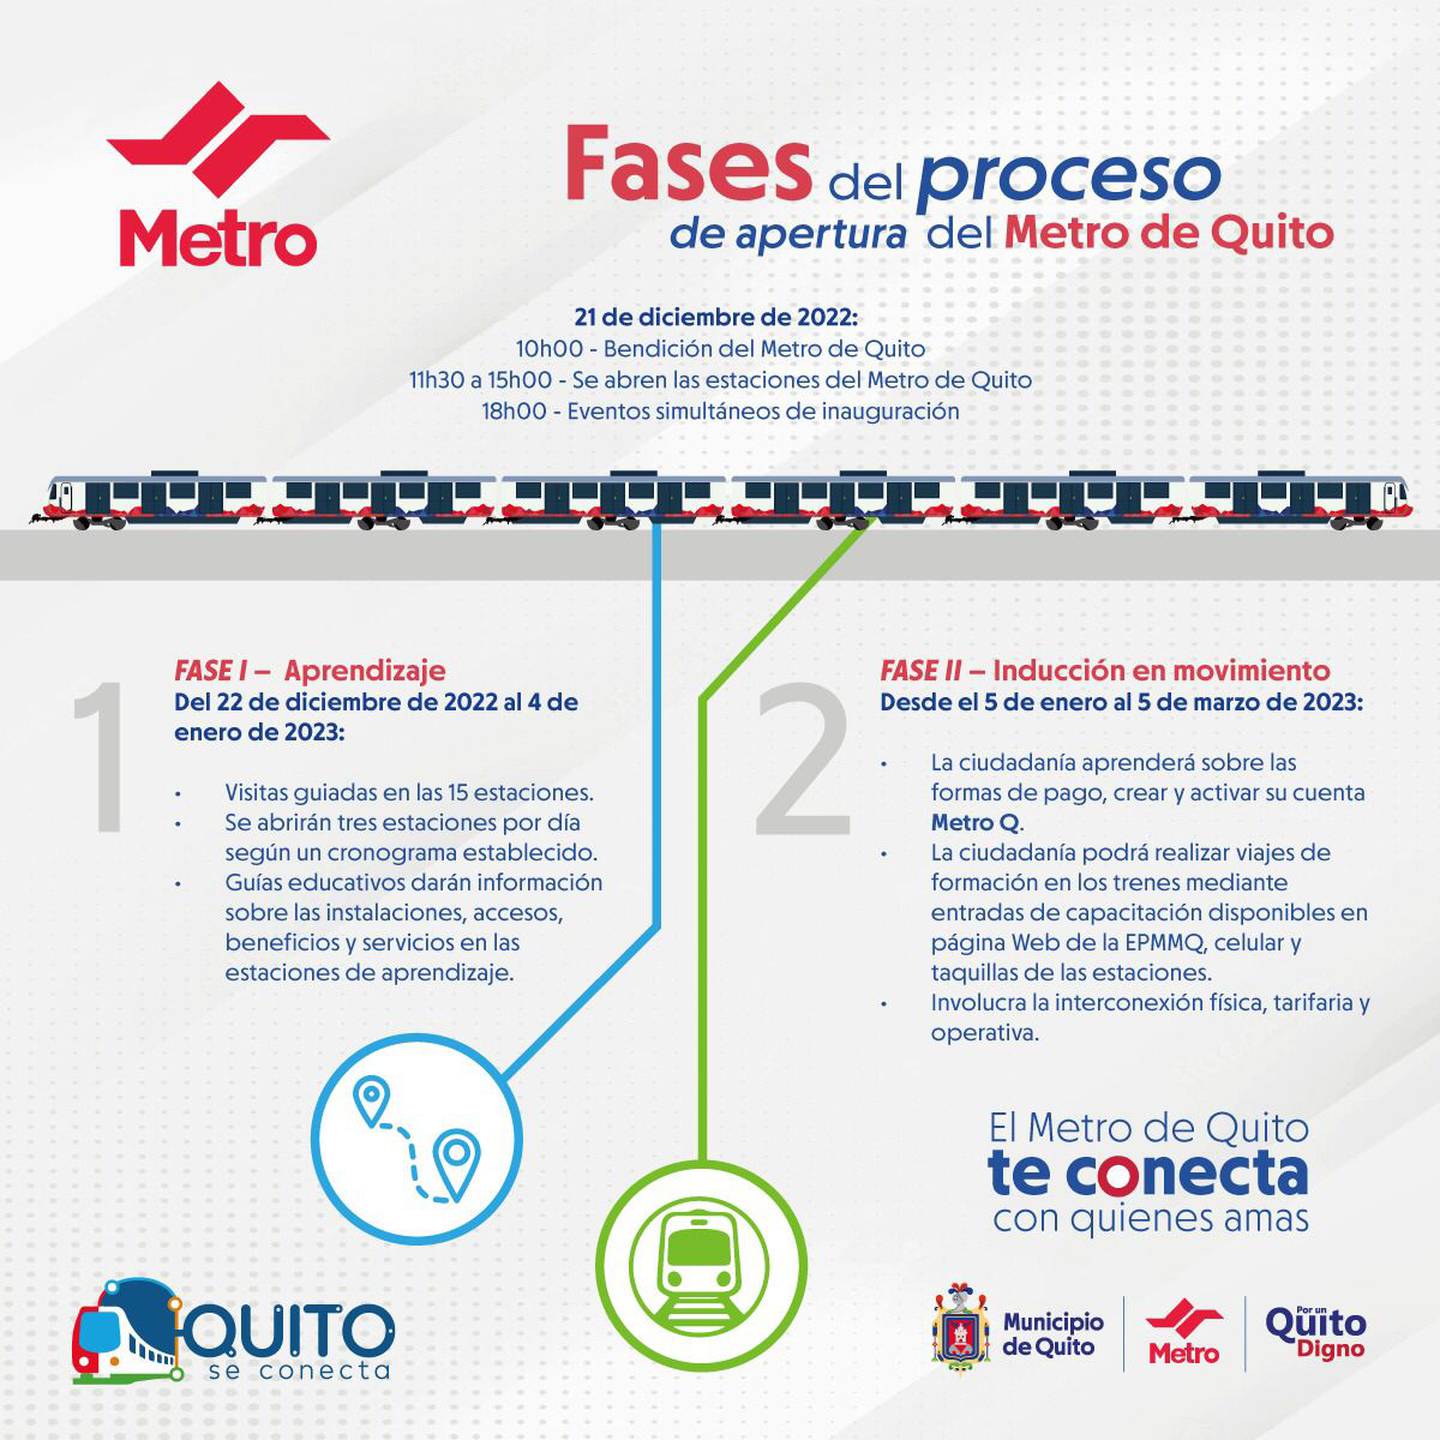 Fases del proceso de apertura del Metro de Quitodfd